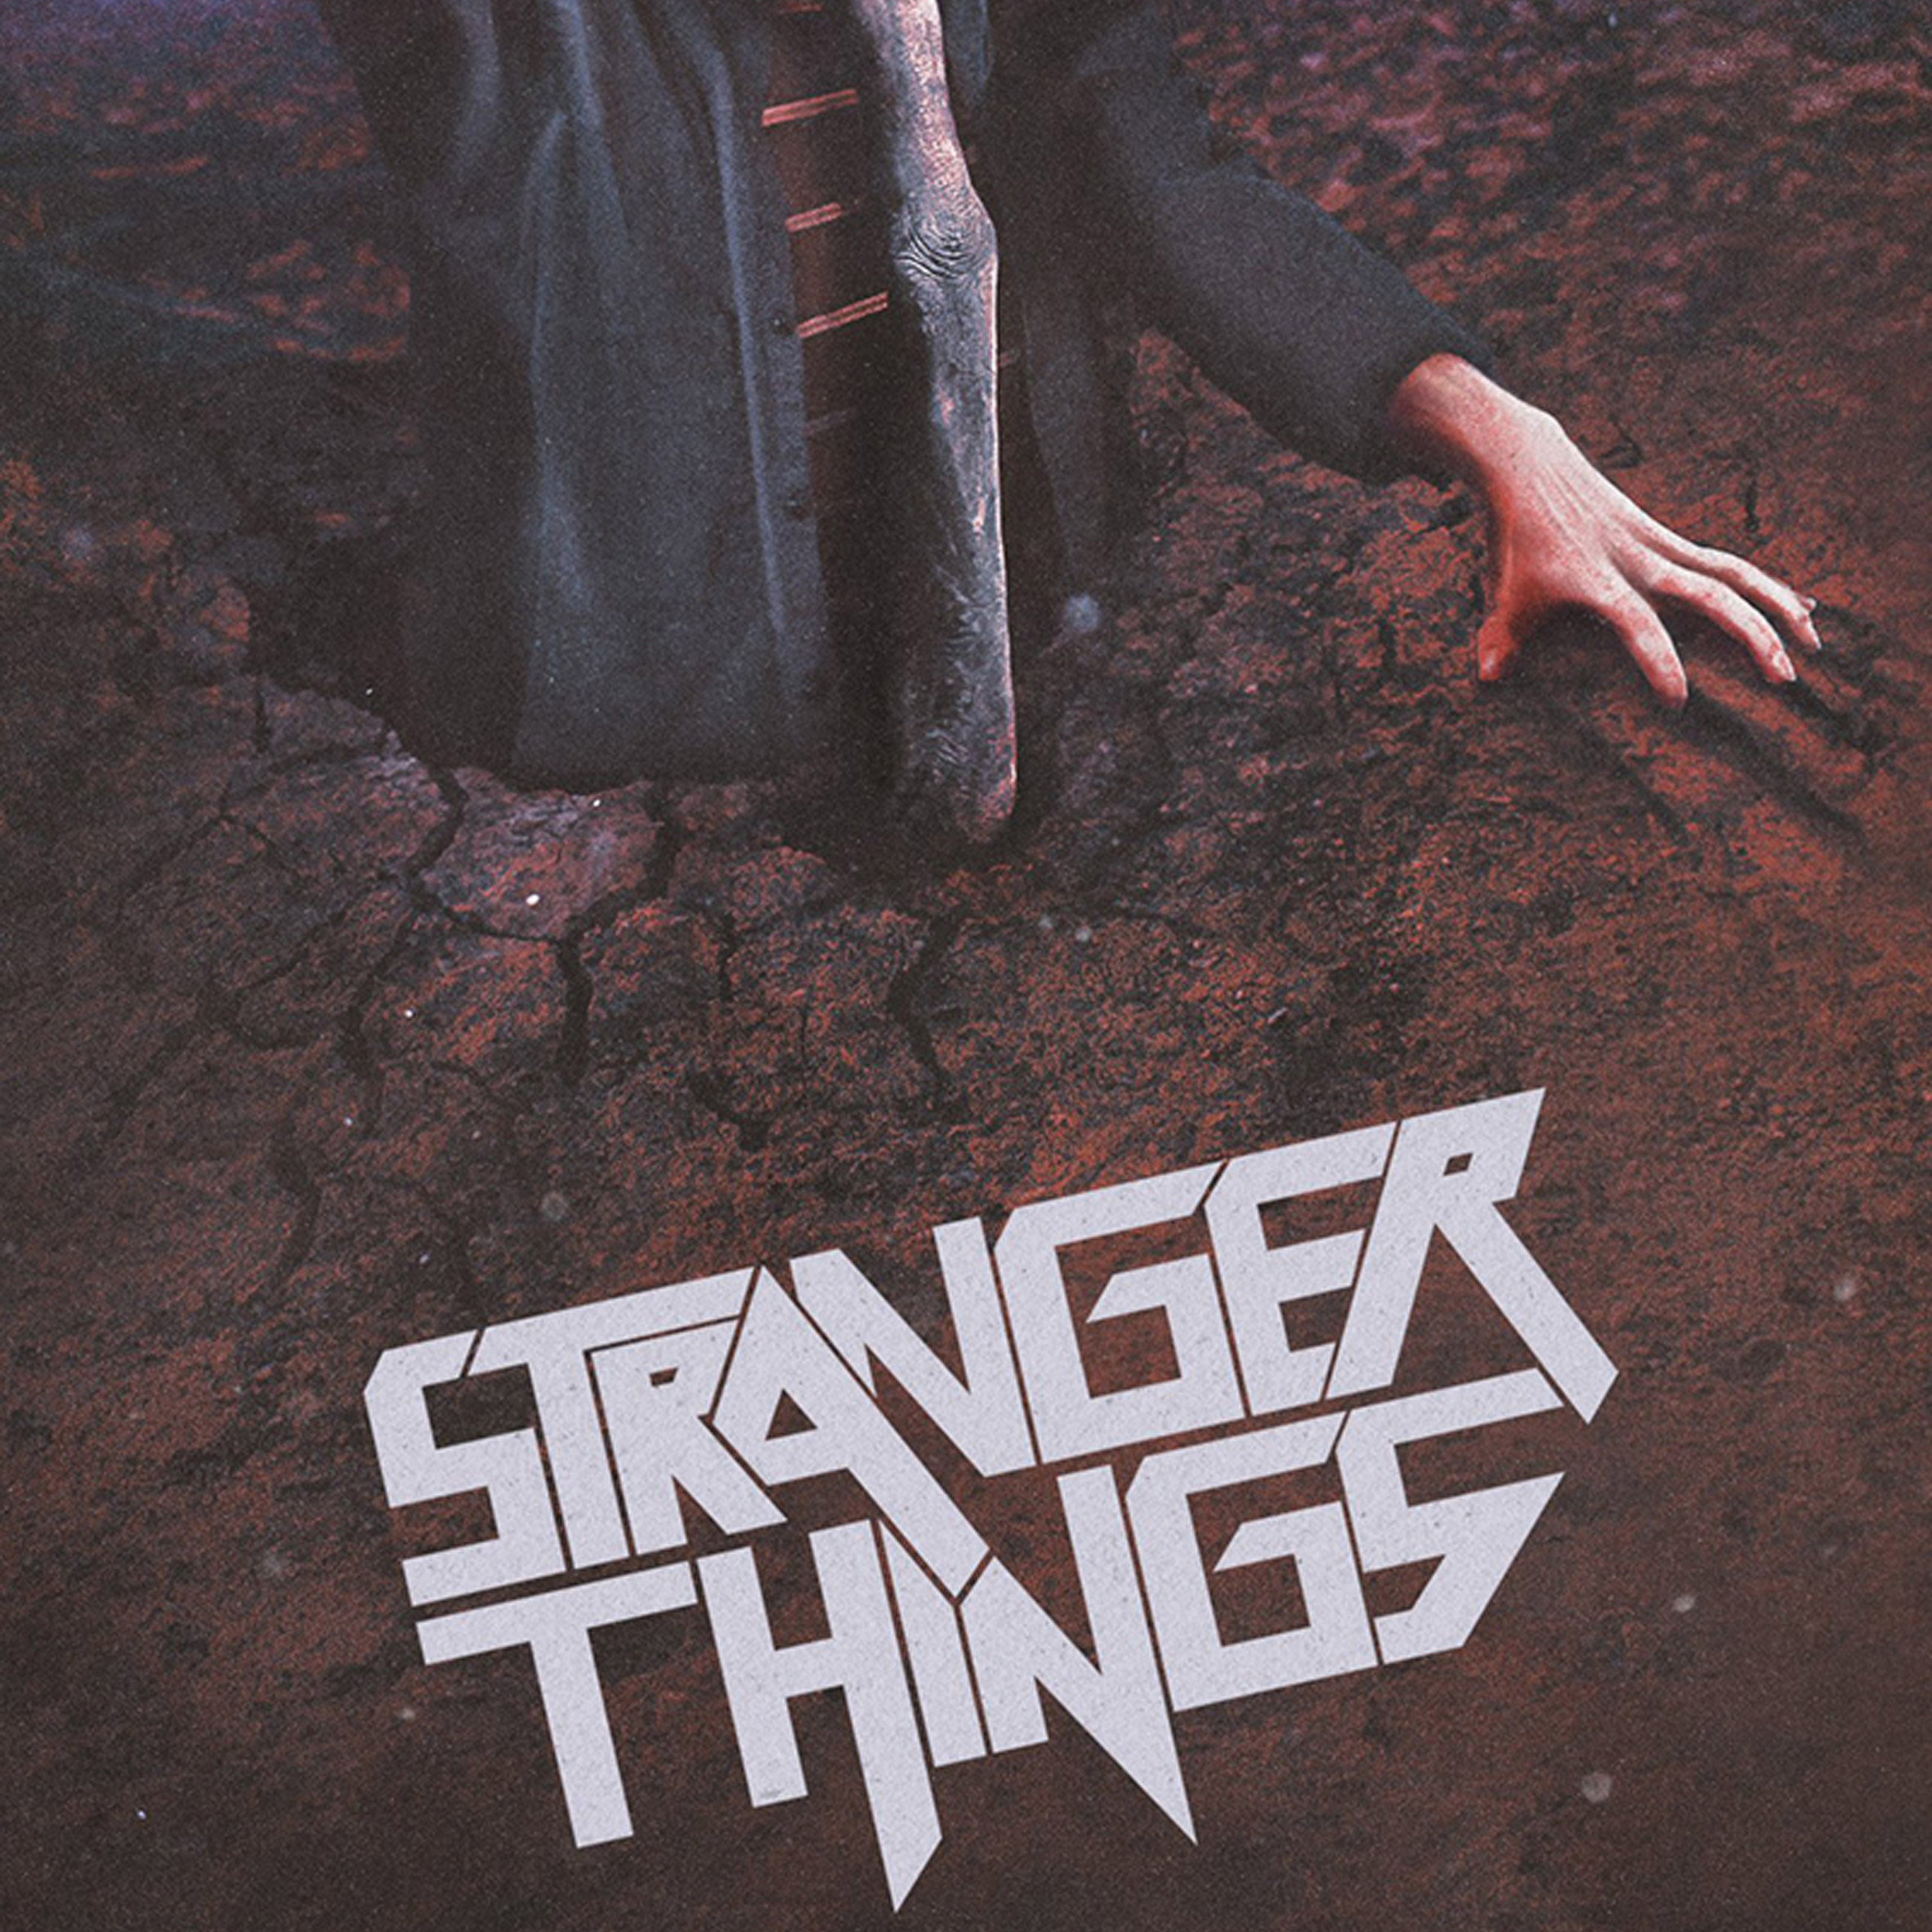 Stranger Things Wallpapers - Top 65 Best Stranger Things Backgrounds